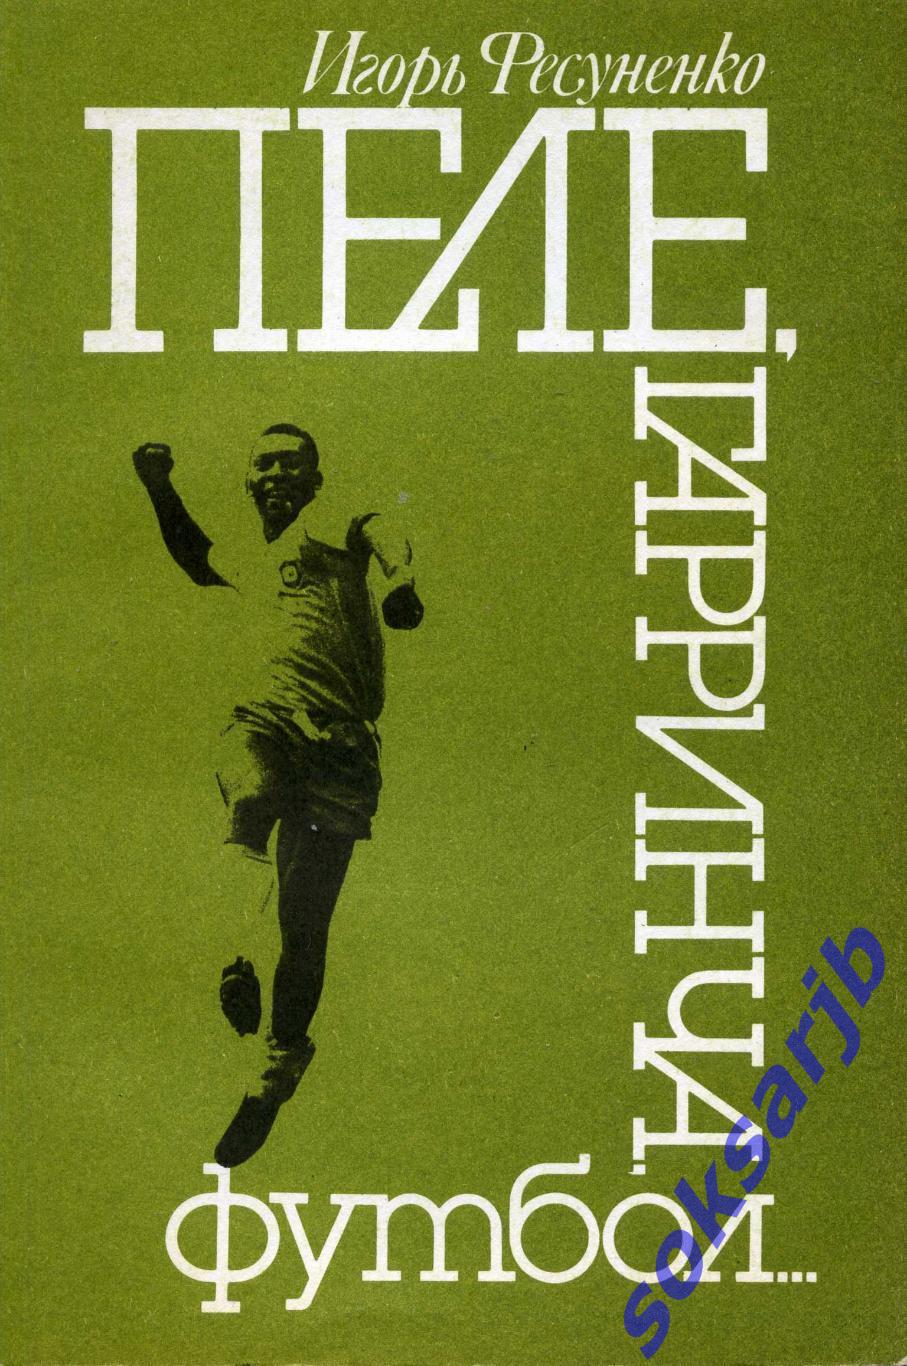 1990. Игорь Фесуненко - Пеле, Гарринча, футбол.